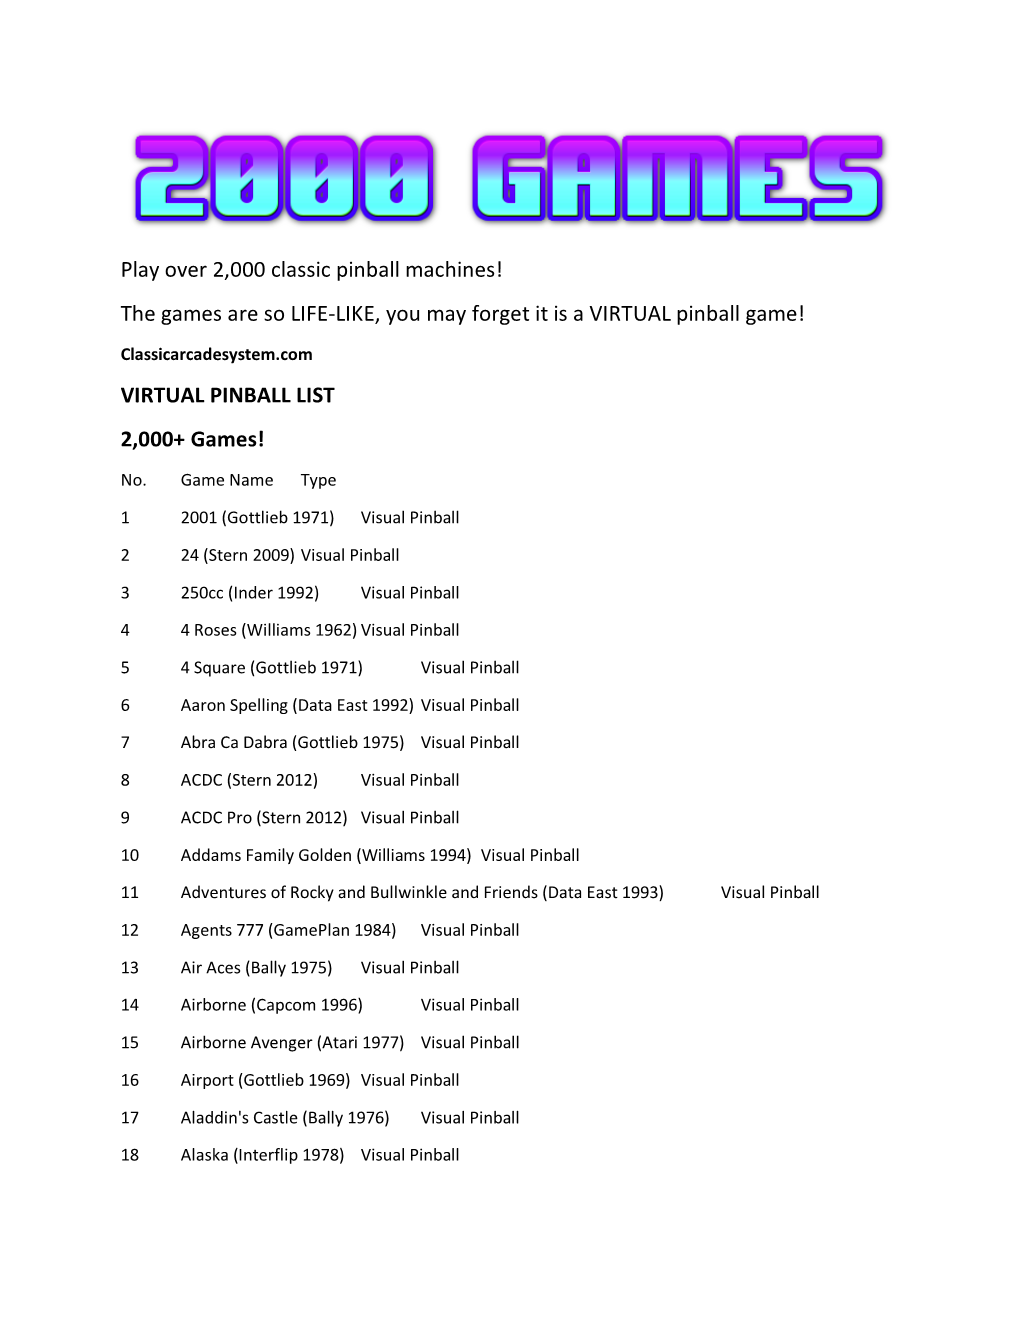 VIRTUAL PINBALL LIST 2000+ Games!